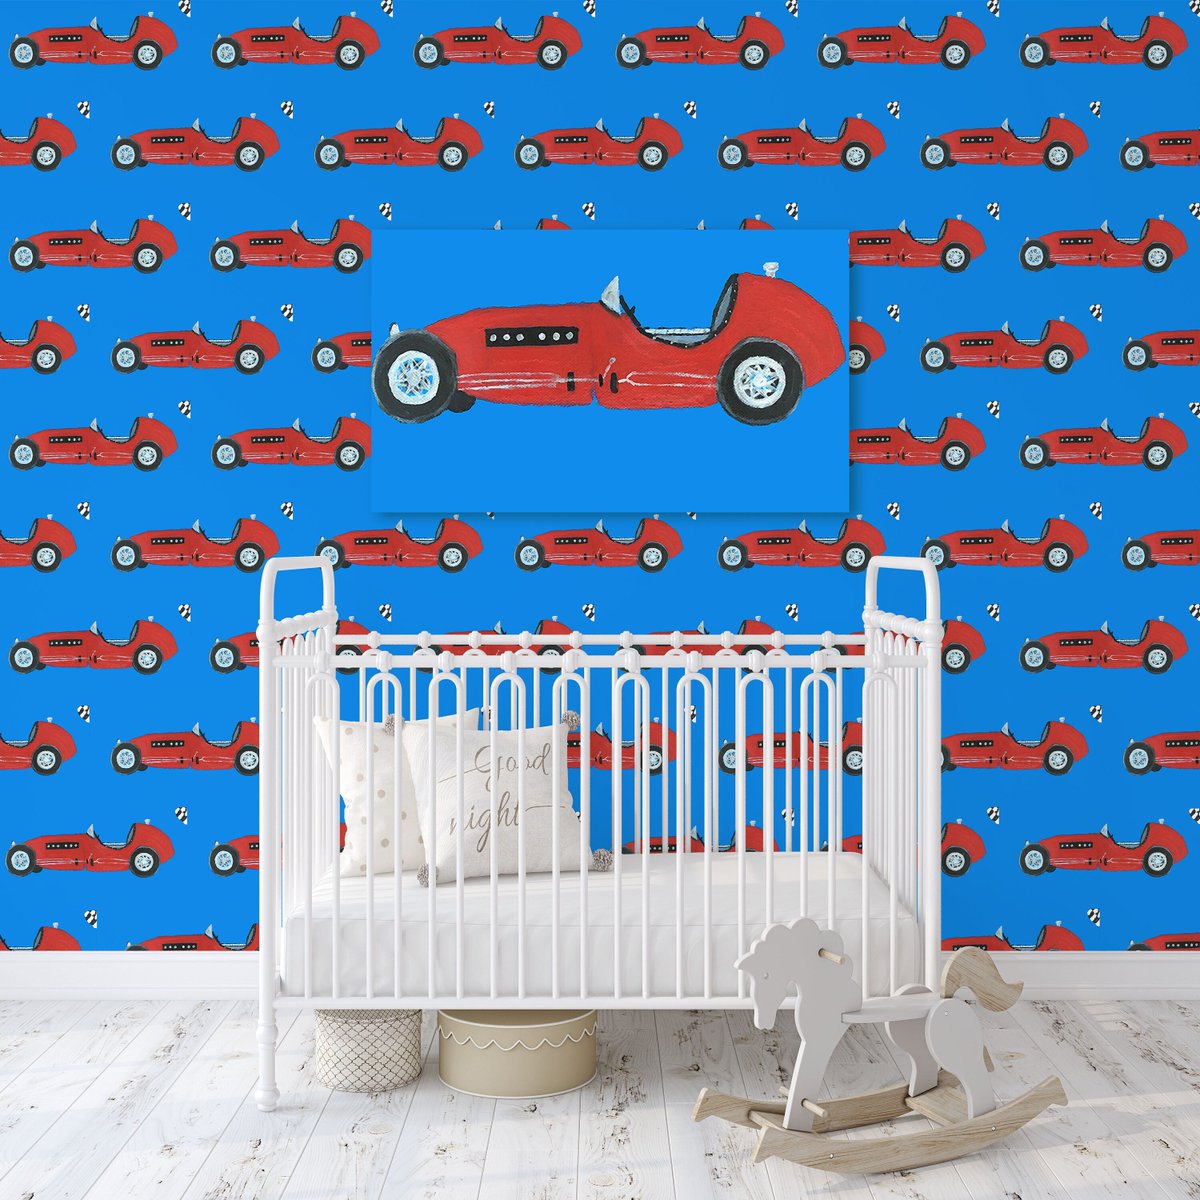 Jacks Race Car Wallpaper - Royal Blue etsy.me/3OUp8sa #blue #red  #bedroom #boho #yes #peelstick #wallpaper #interiordesign #racecar#cars #kidsroom #vintage #babynursery